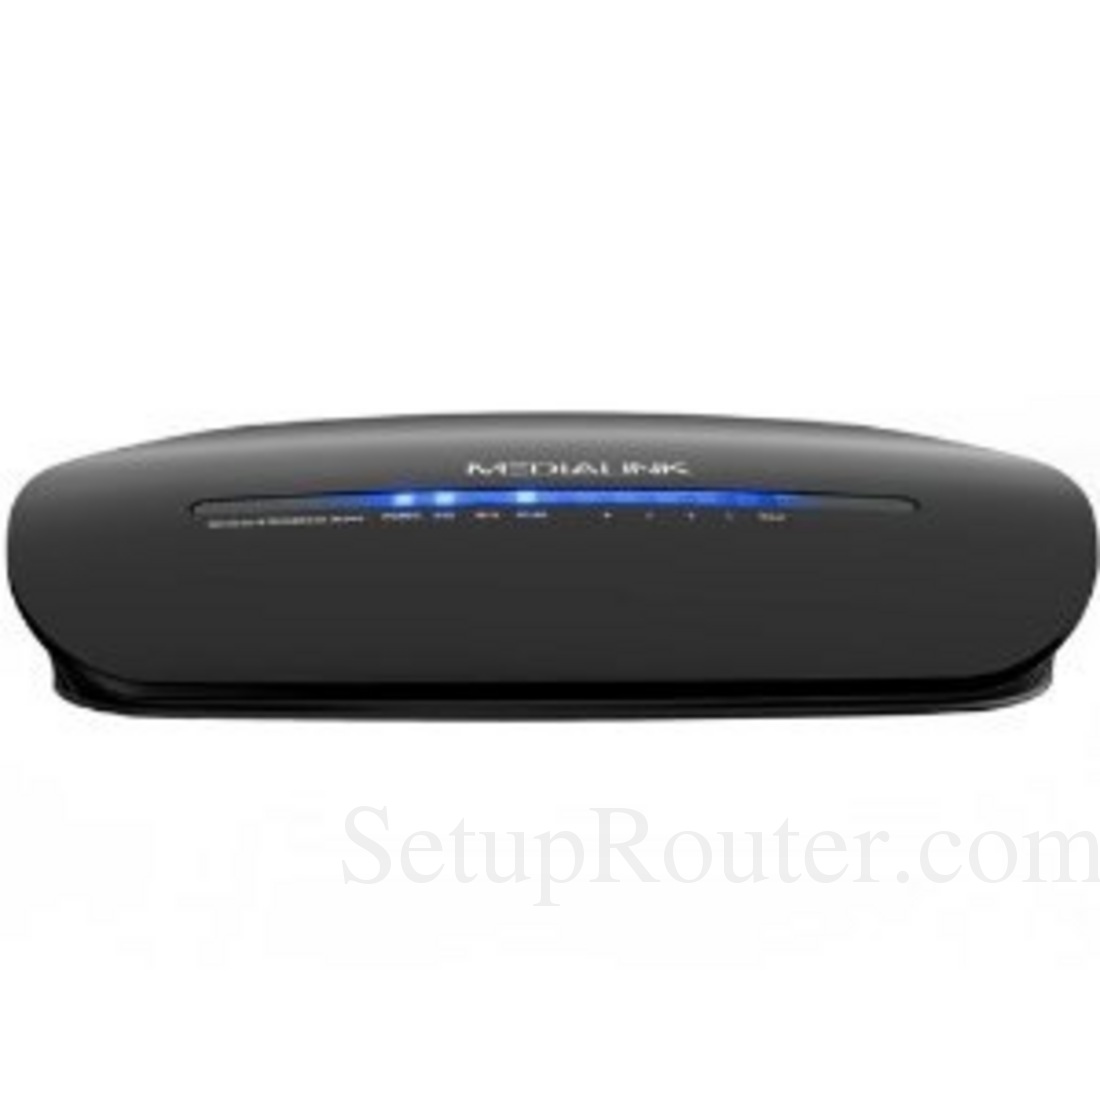 medialink router website